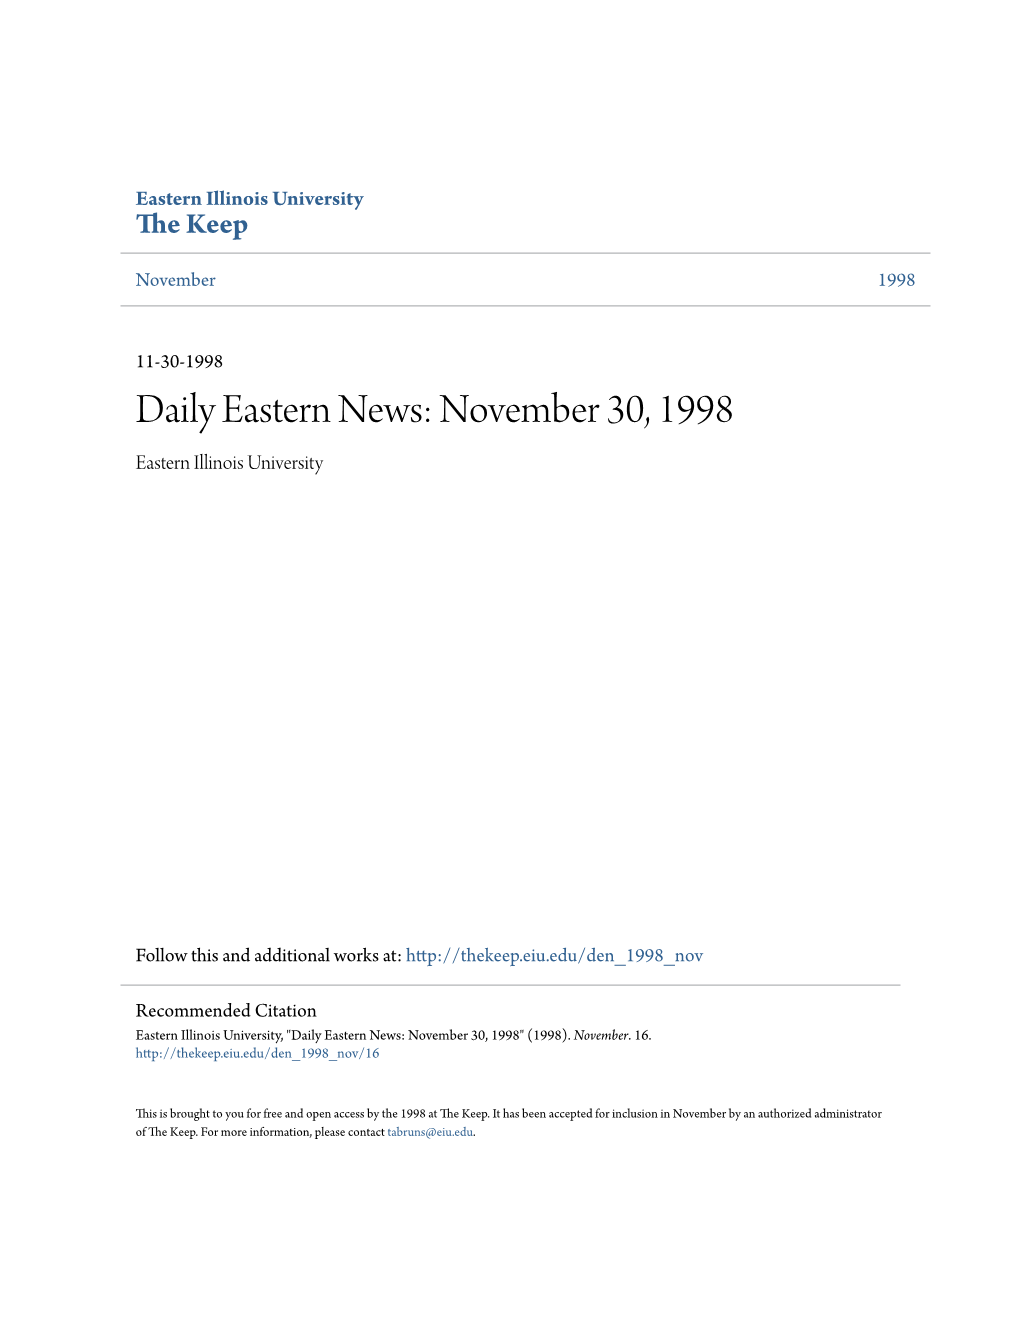 Daily Eastern News: November 30, 1998 Eastern Illinois University